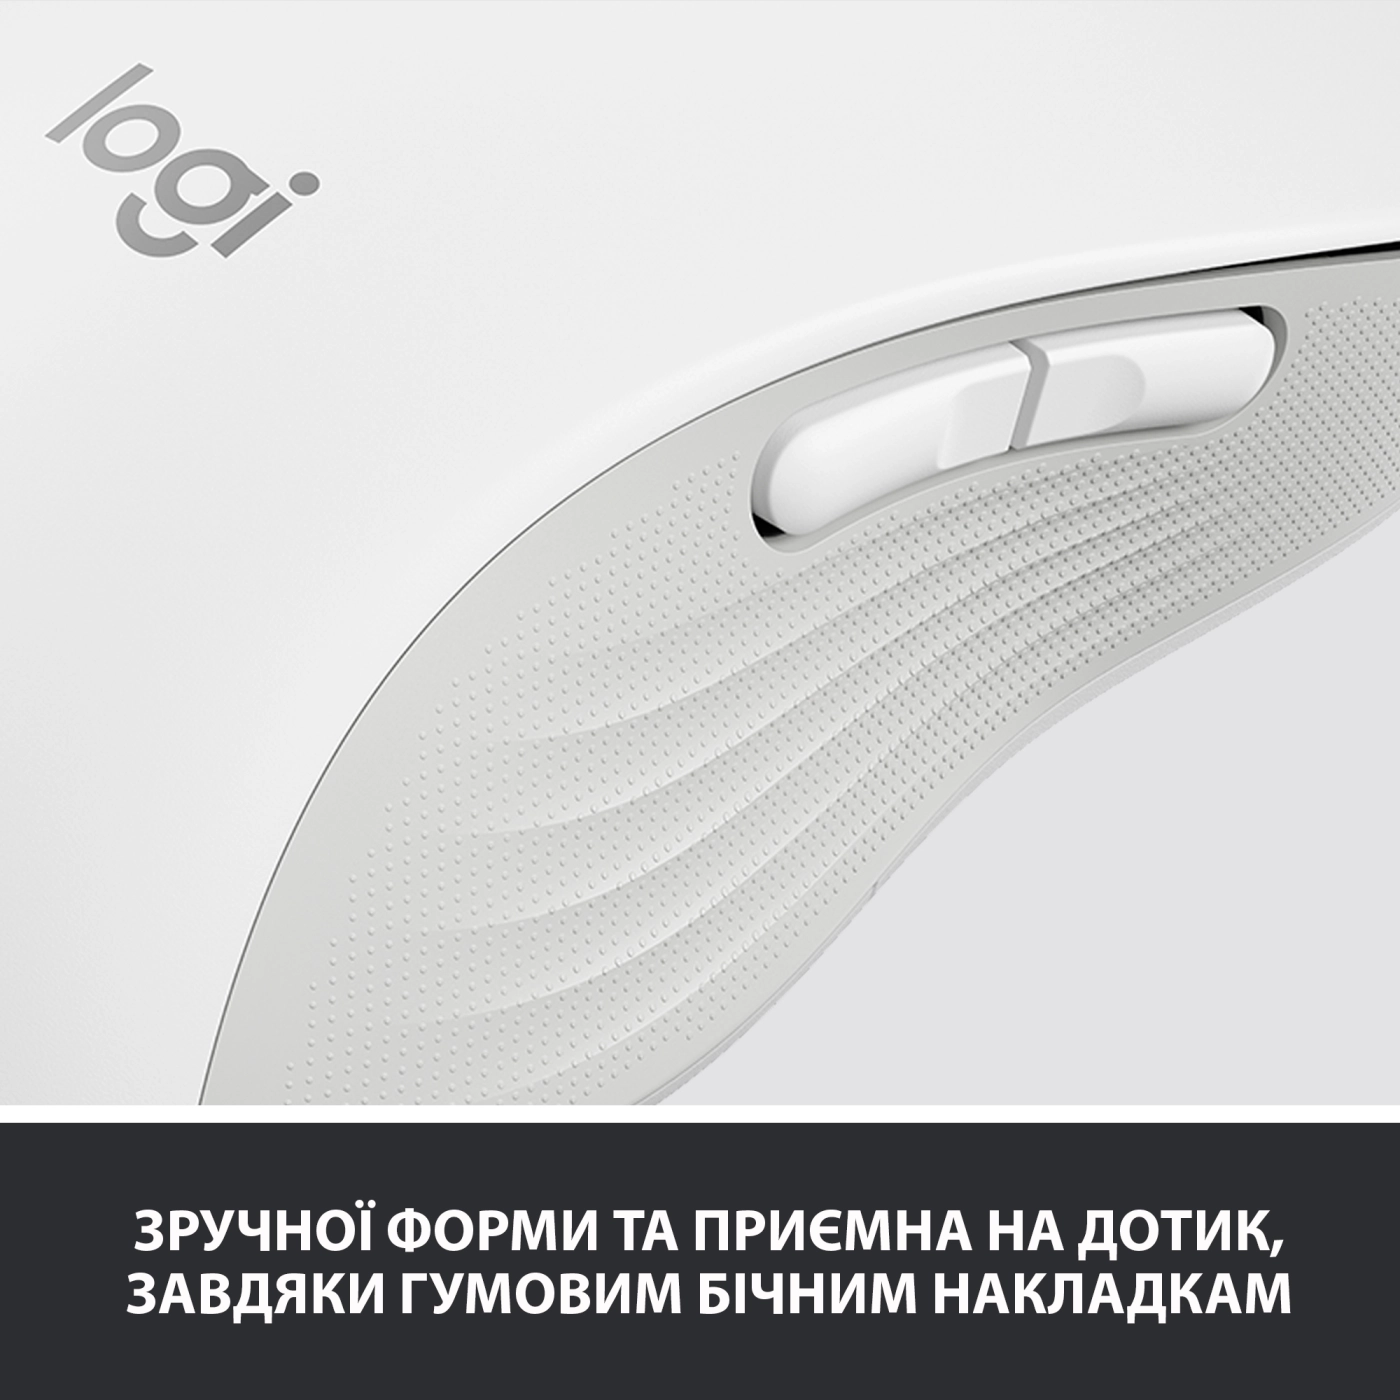 Купить Мышь Logitech Signature M650 L Wireless Mouse off-white BT LEFT (910-006240) - фото 7